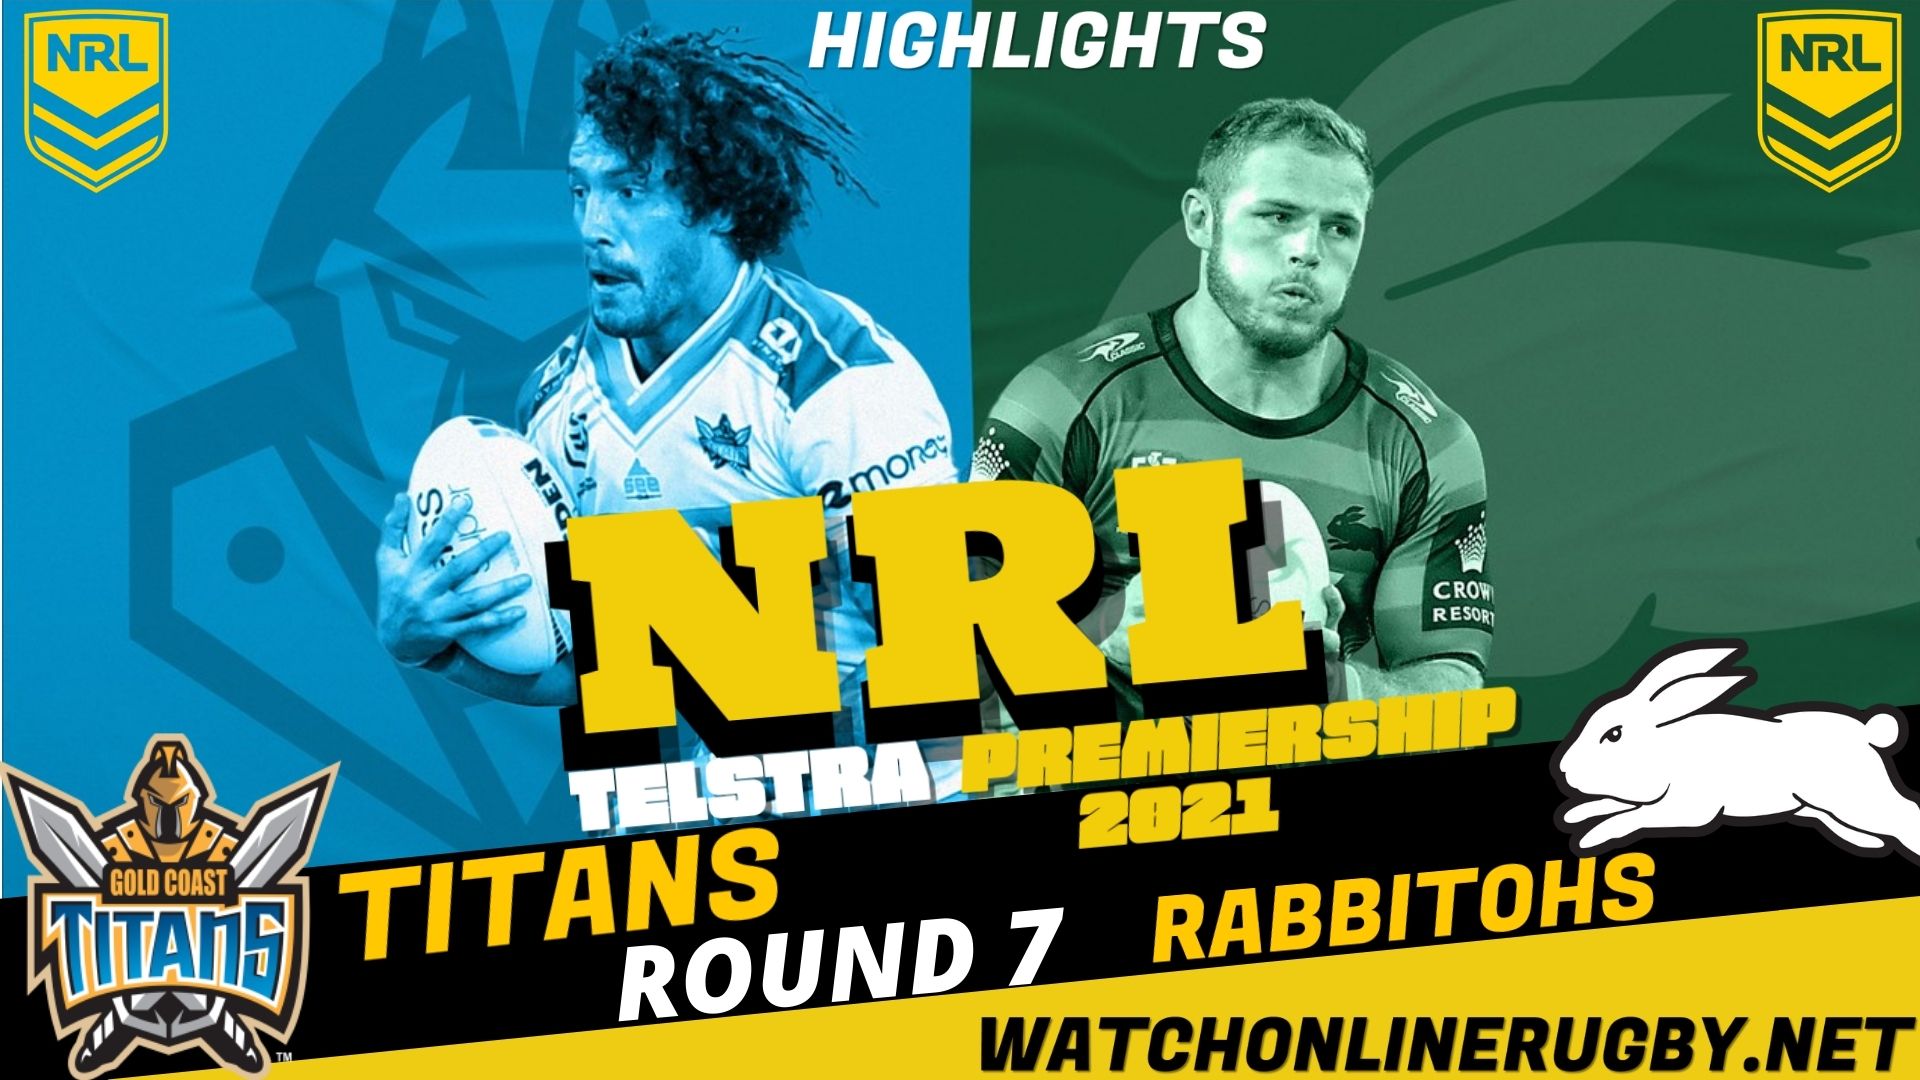 Titans Vs Rabbitohs Highlights RD 7 NRL Rugby